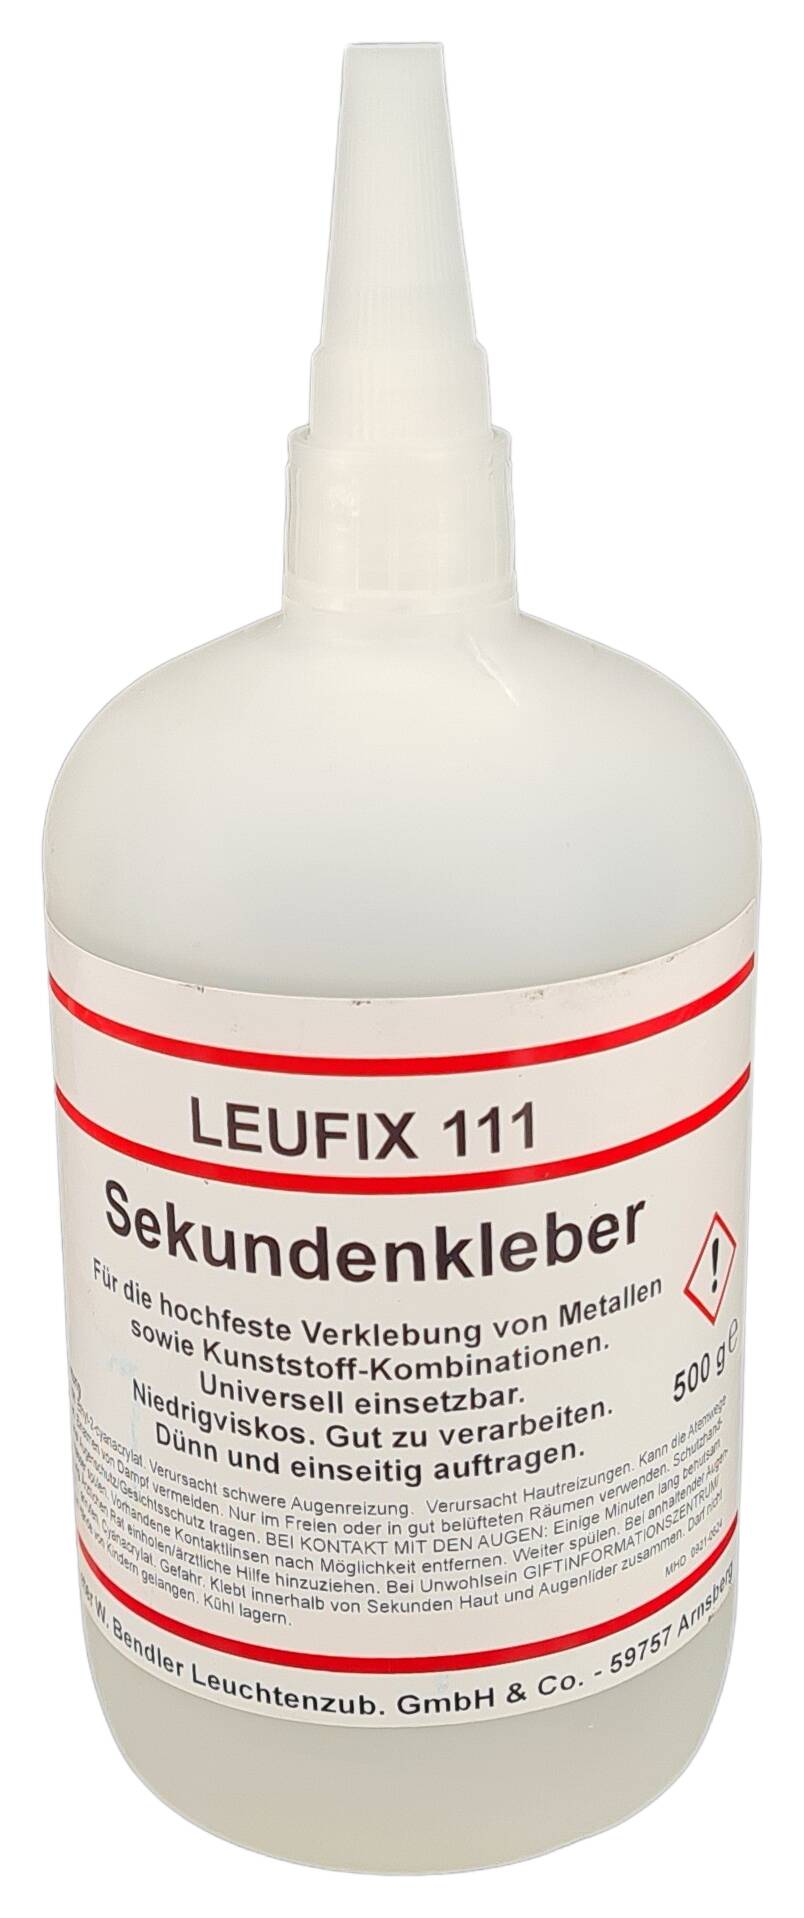 adhesive Leufix 111 á 500 gr. Universal adhesive for metal and plastic